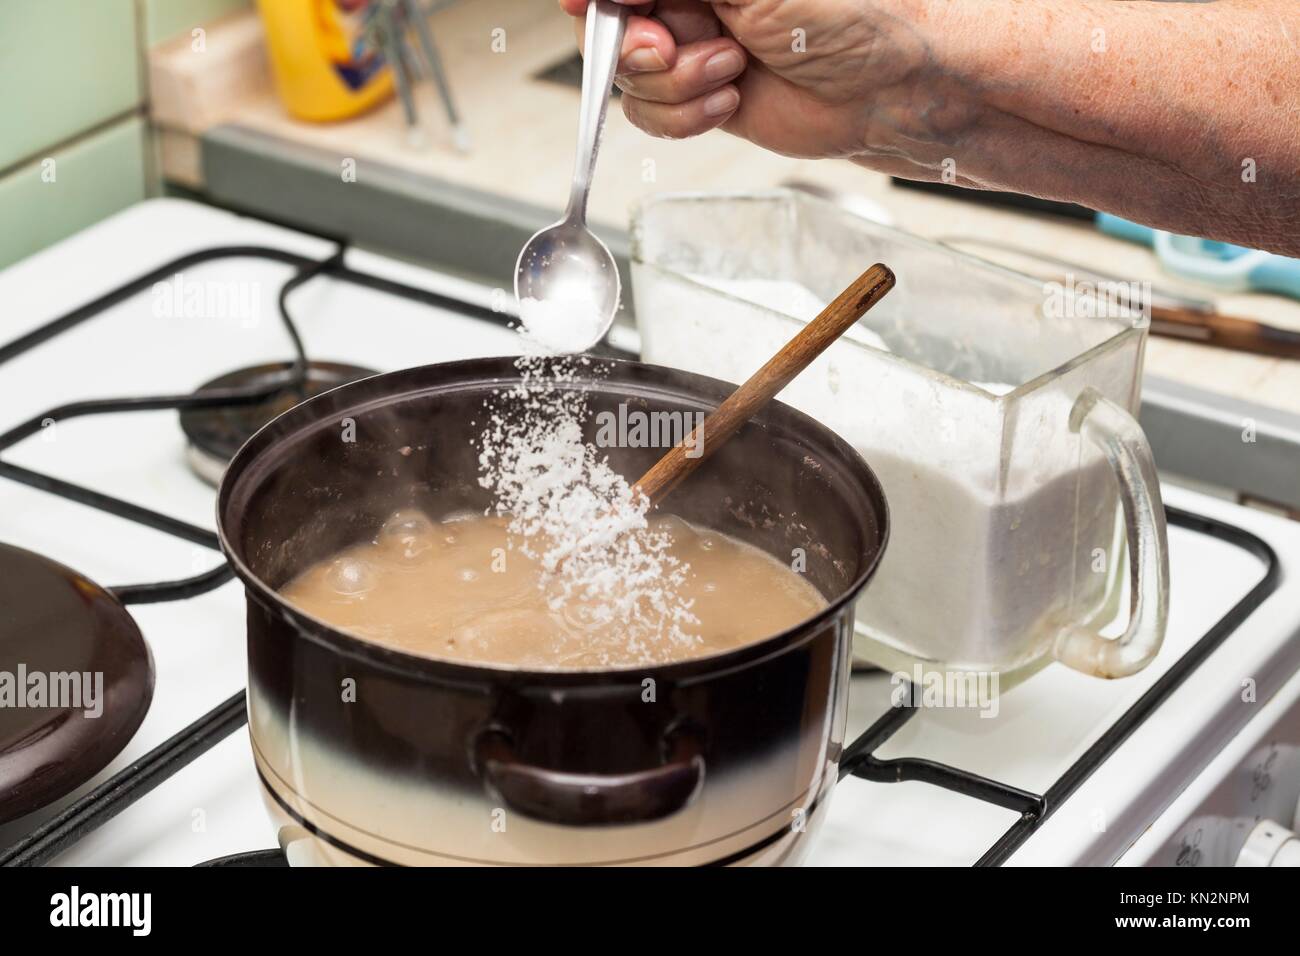 https://c8.alamy.com/comp/KN2NPM/detail-of-pouring-salt-into-boiling-soup-in-pot-on-cooker-KN2NPM.jpg